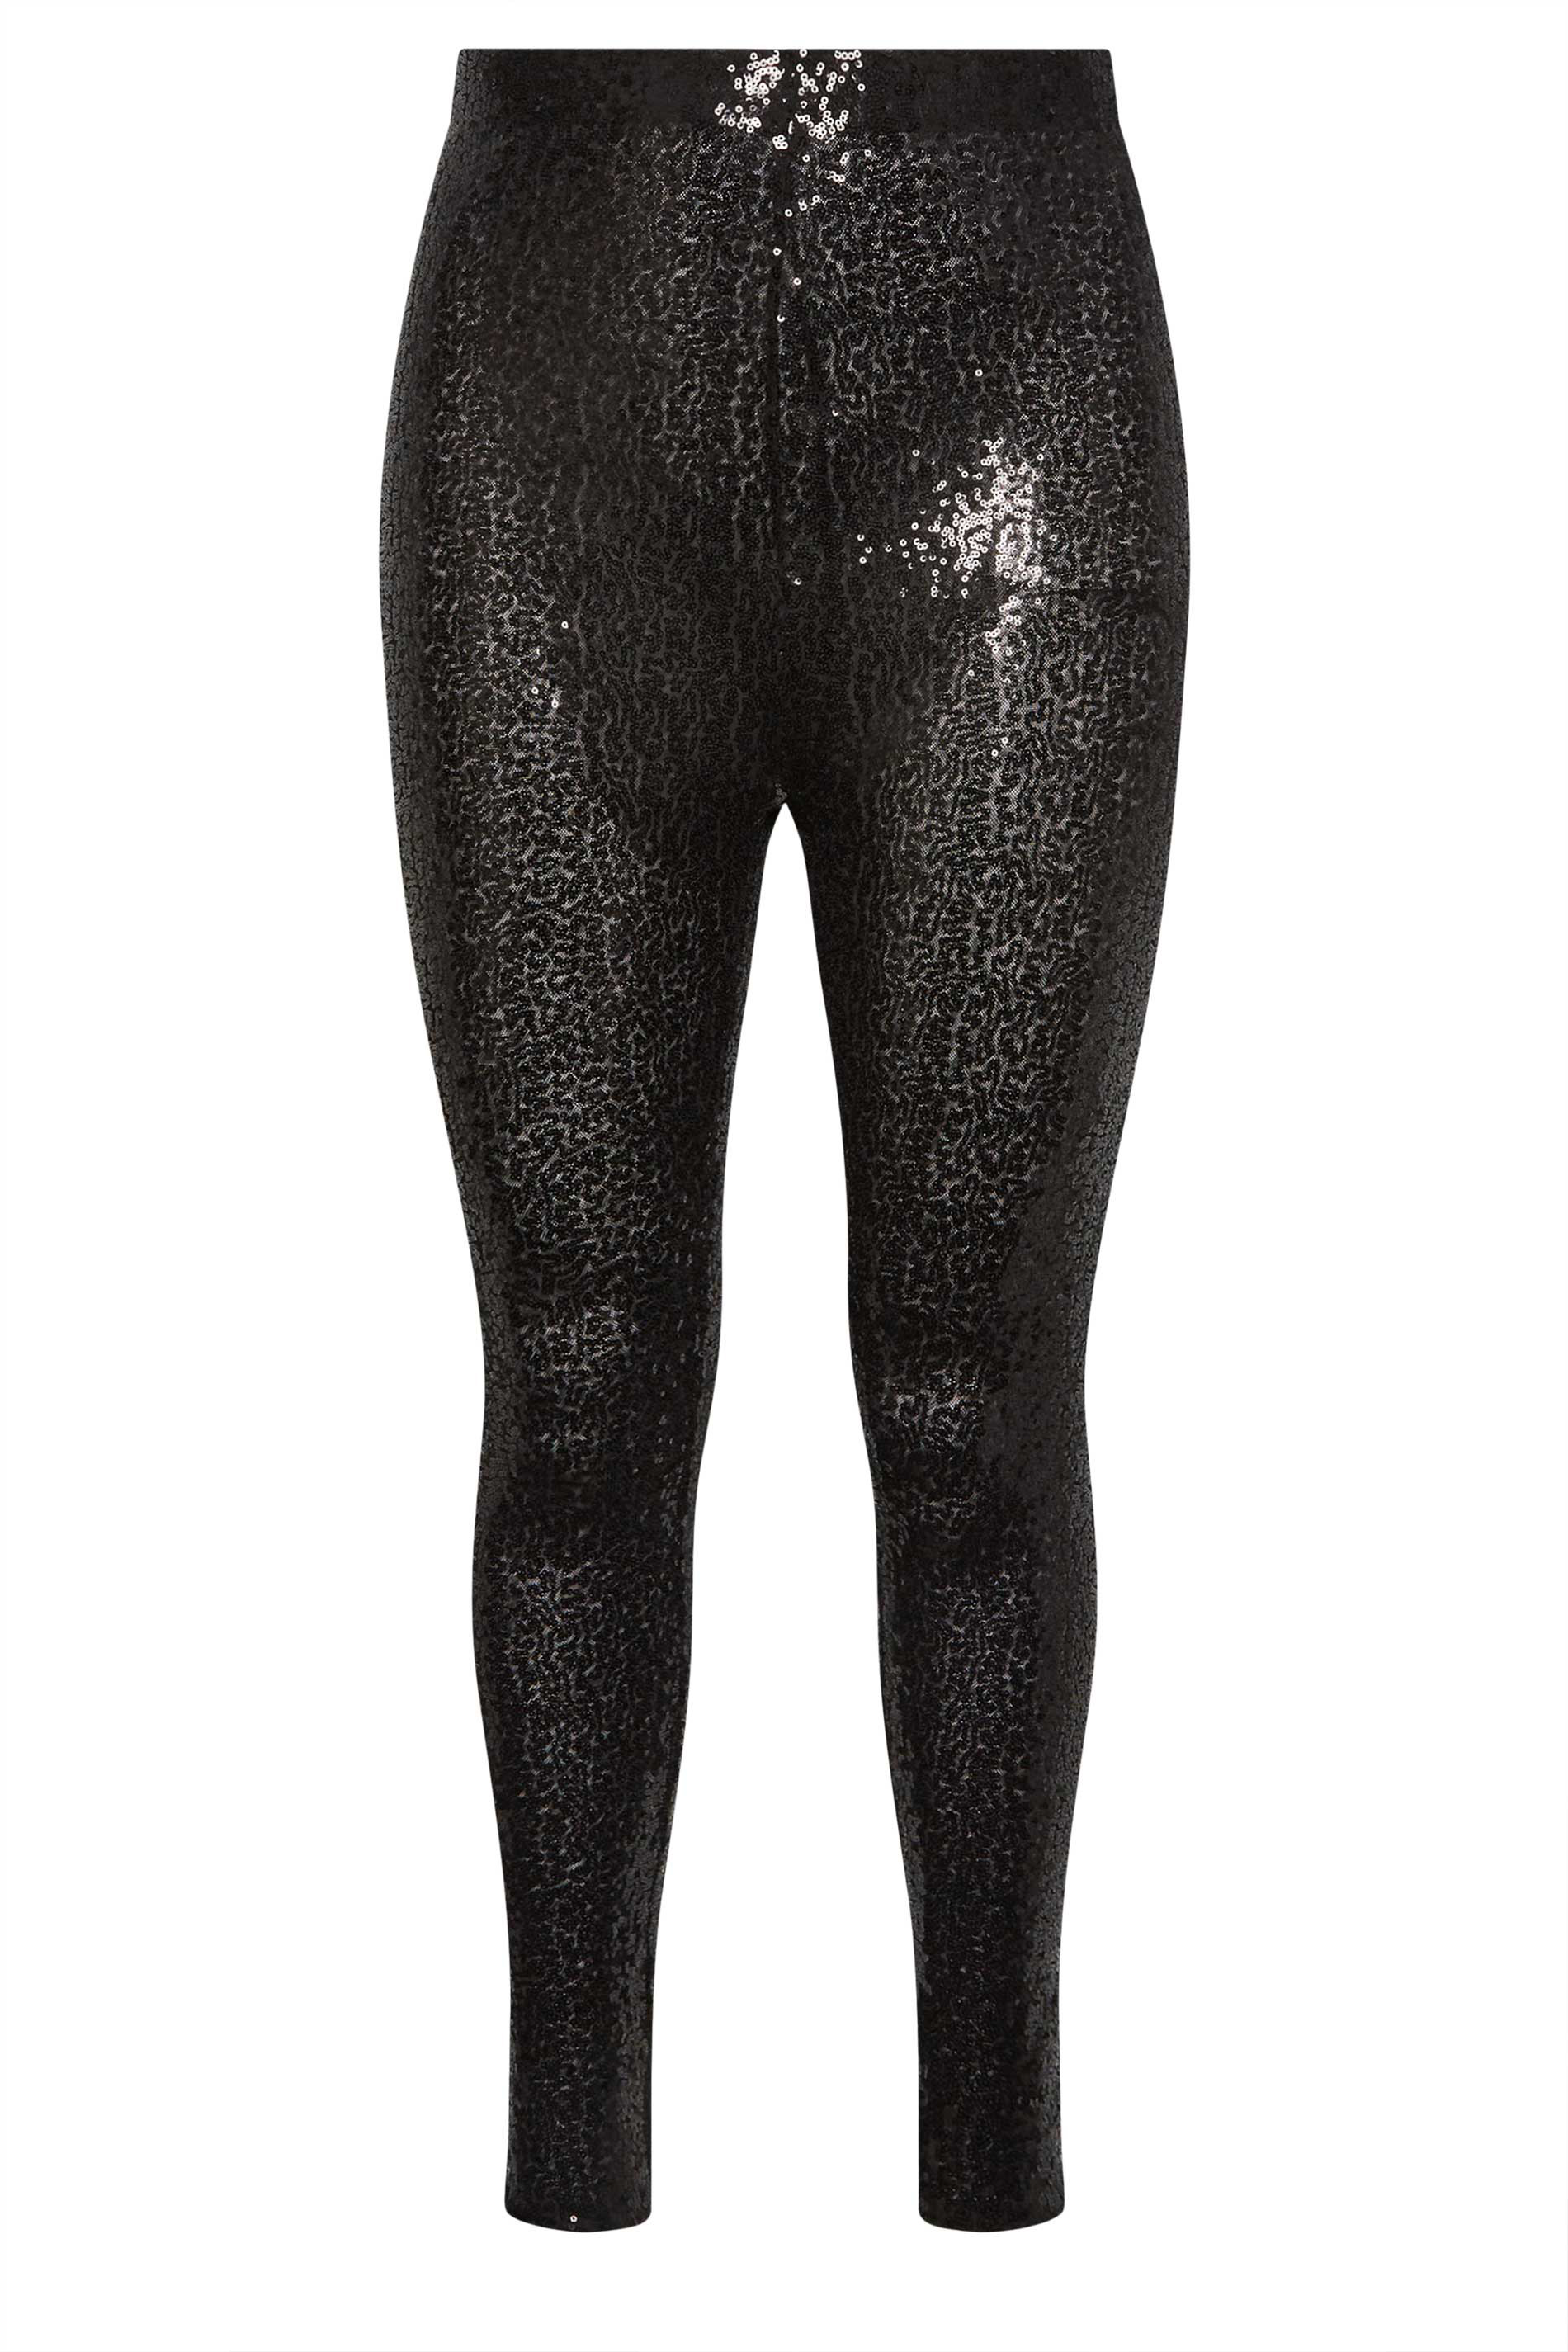 Wholesale Black Sparkle Full Length Leggings/Tights - Plus Size